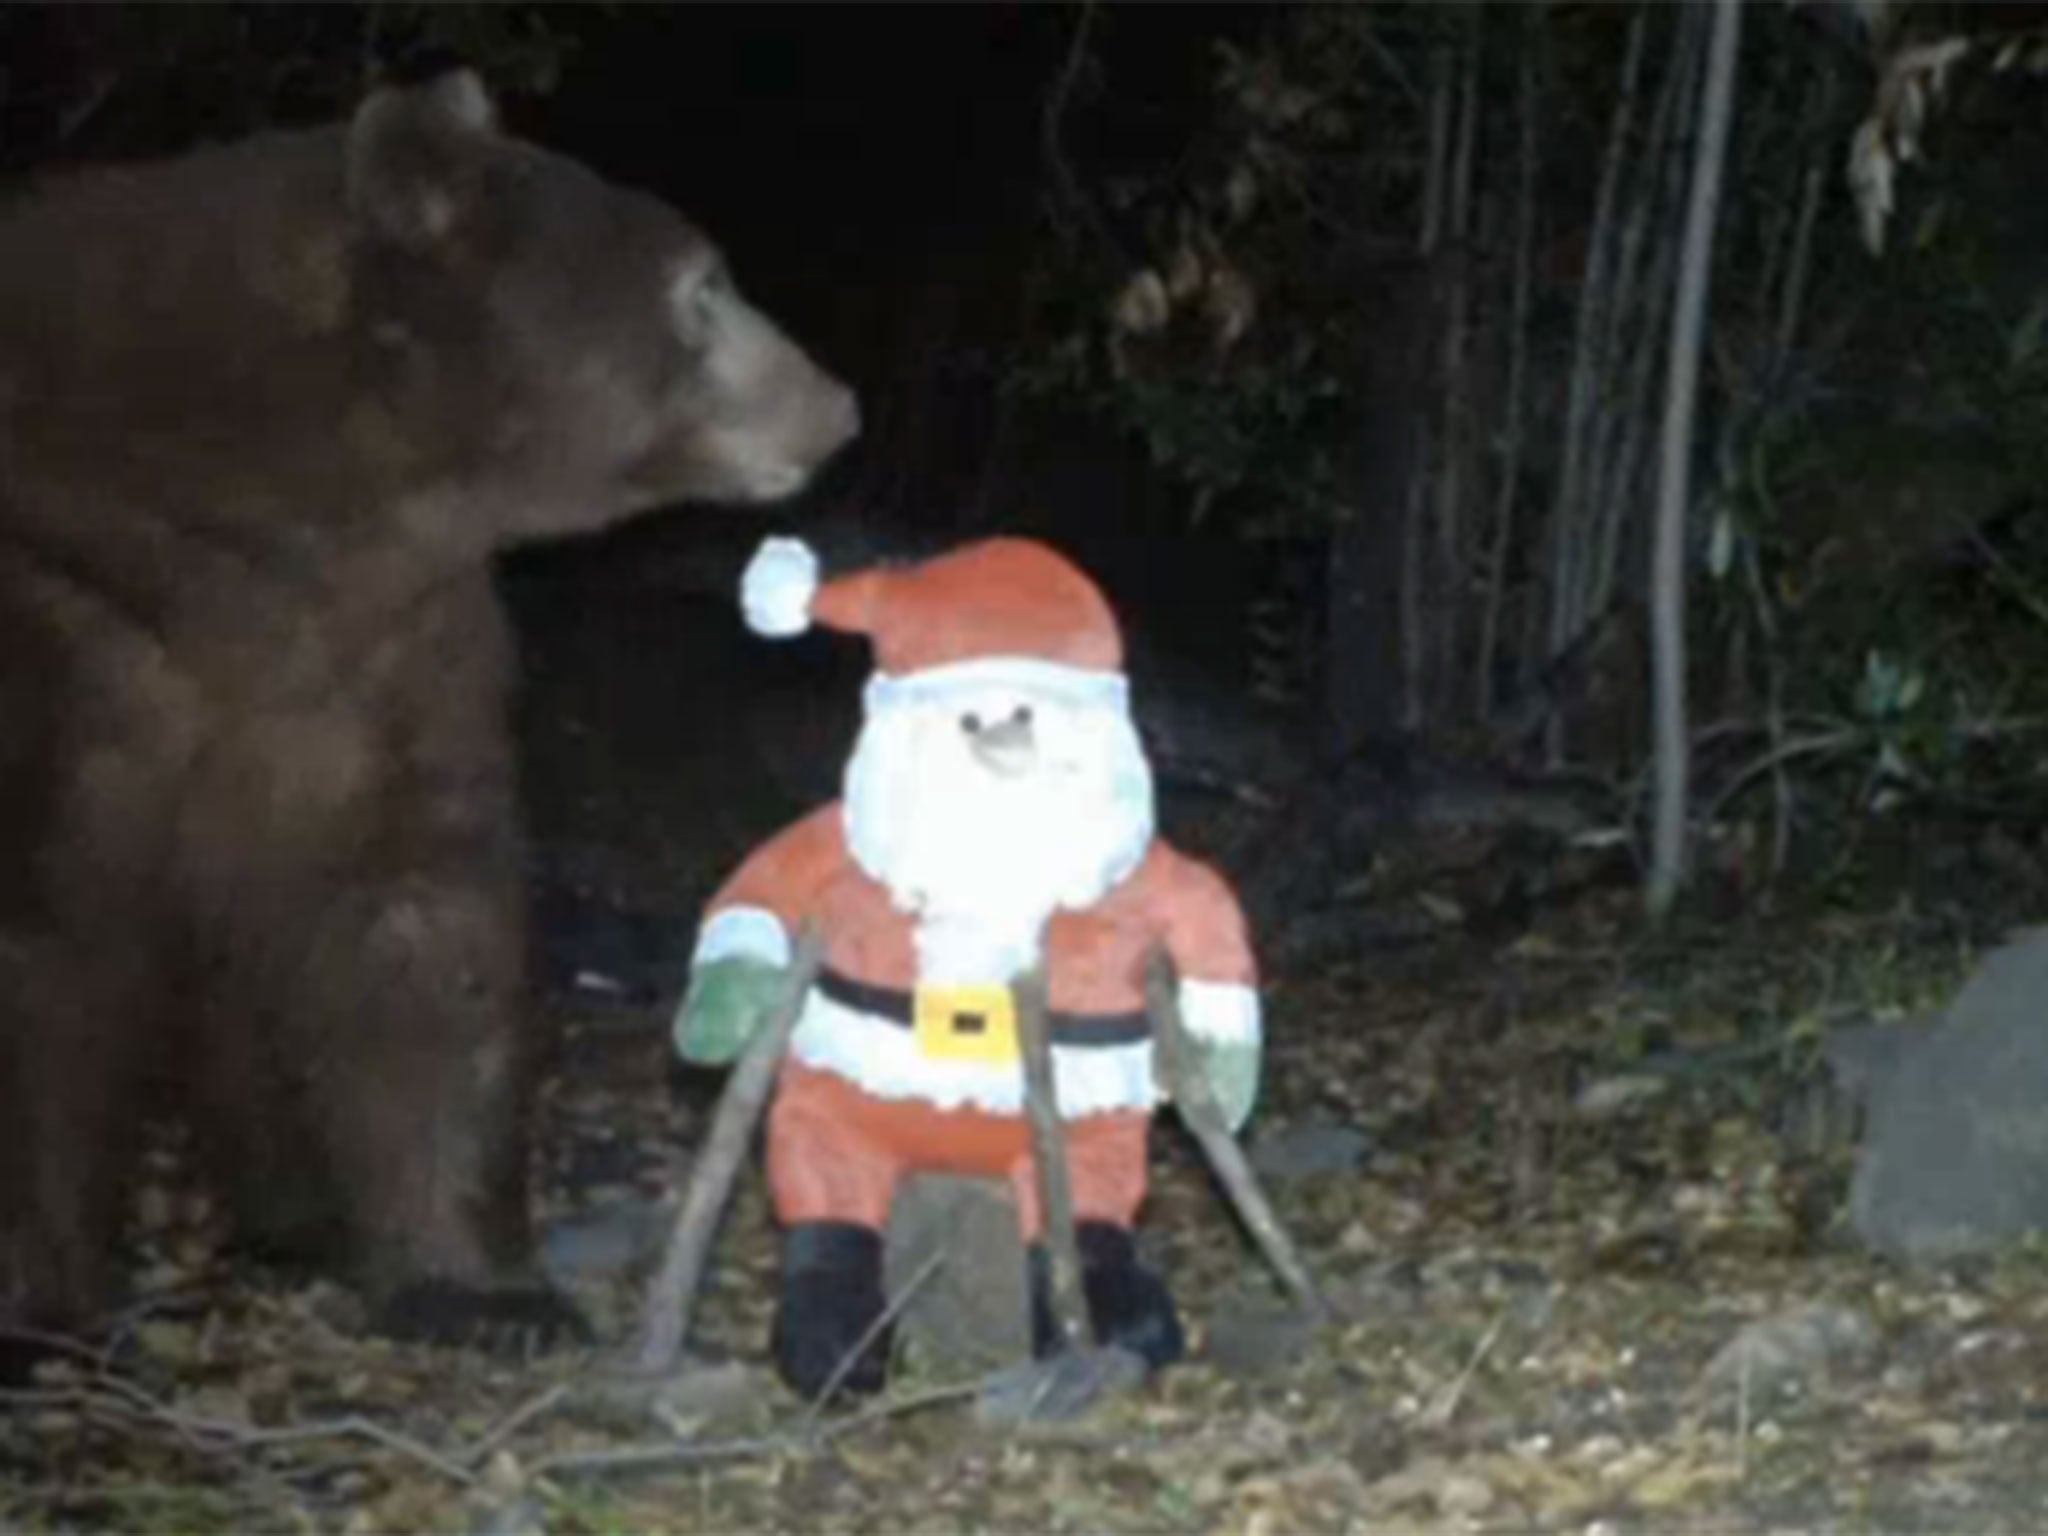 Brown bear attacks Santa Claus.